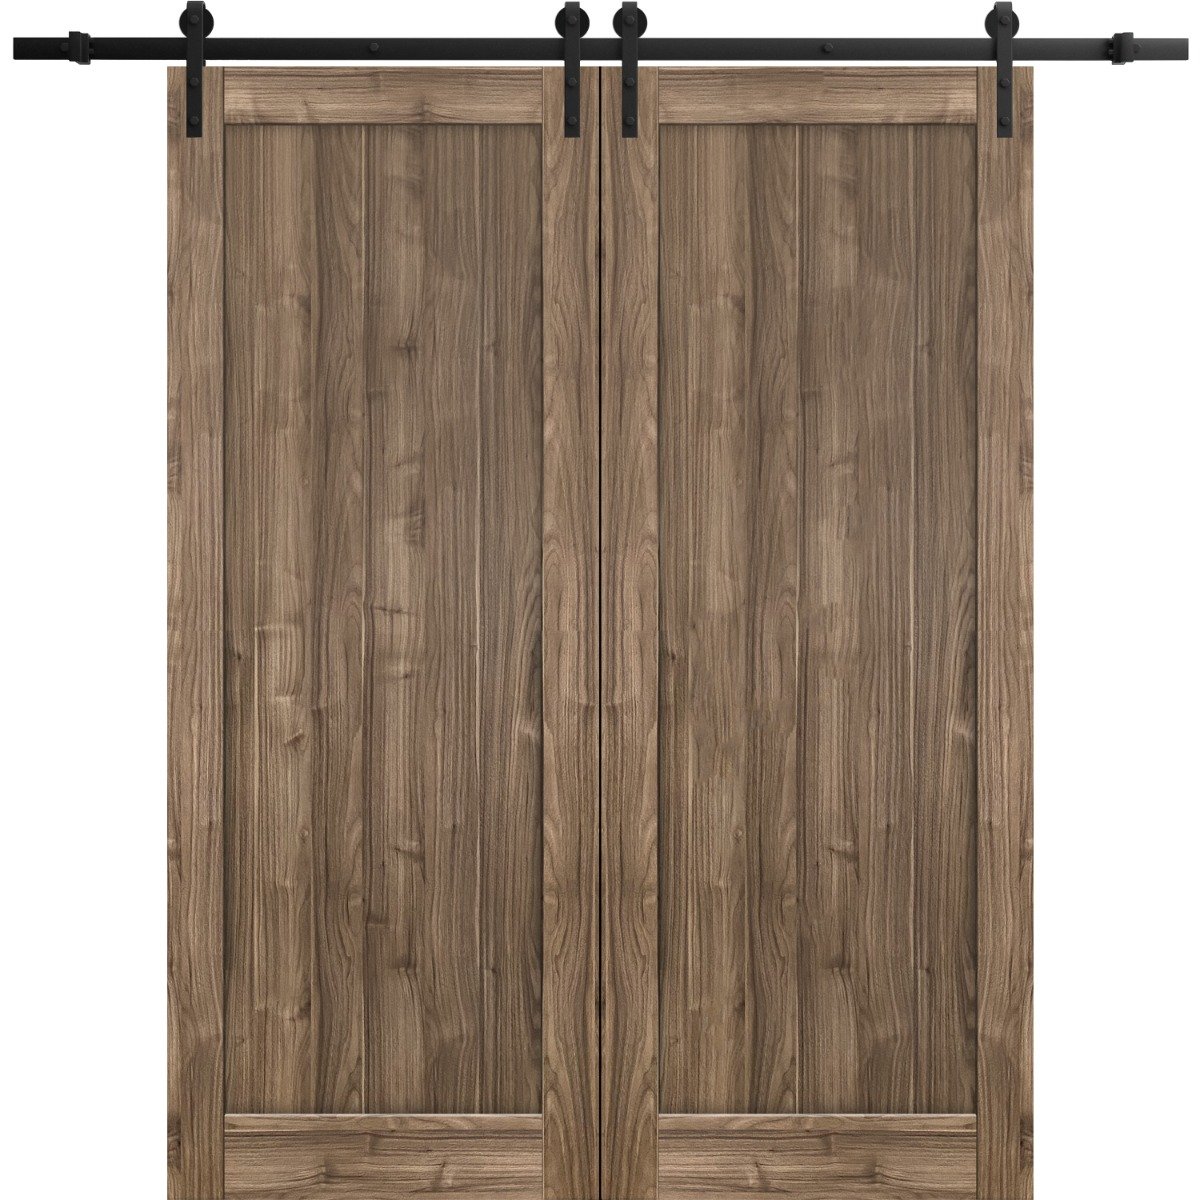 Sliding Double Barn Doors Hardware | Quadro 4111 Walnut | 13FT Rail Sturdy Set | Kitchen Lite Wooden Solid Panel Interior Bedroom Bathroom Door-72